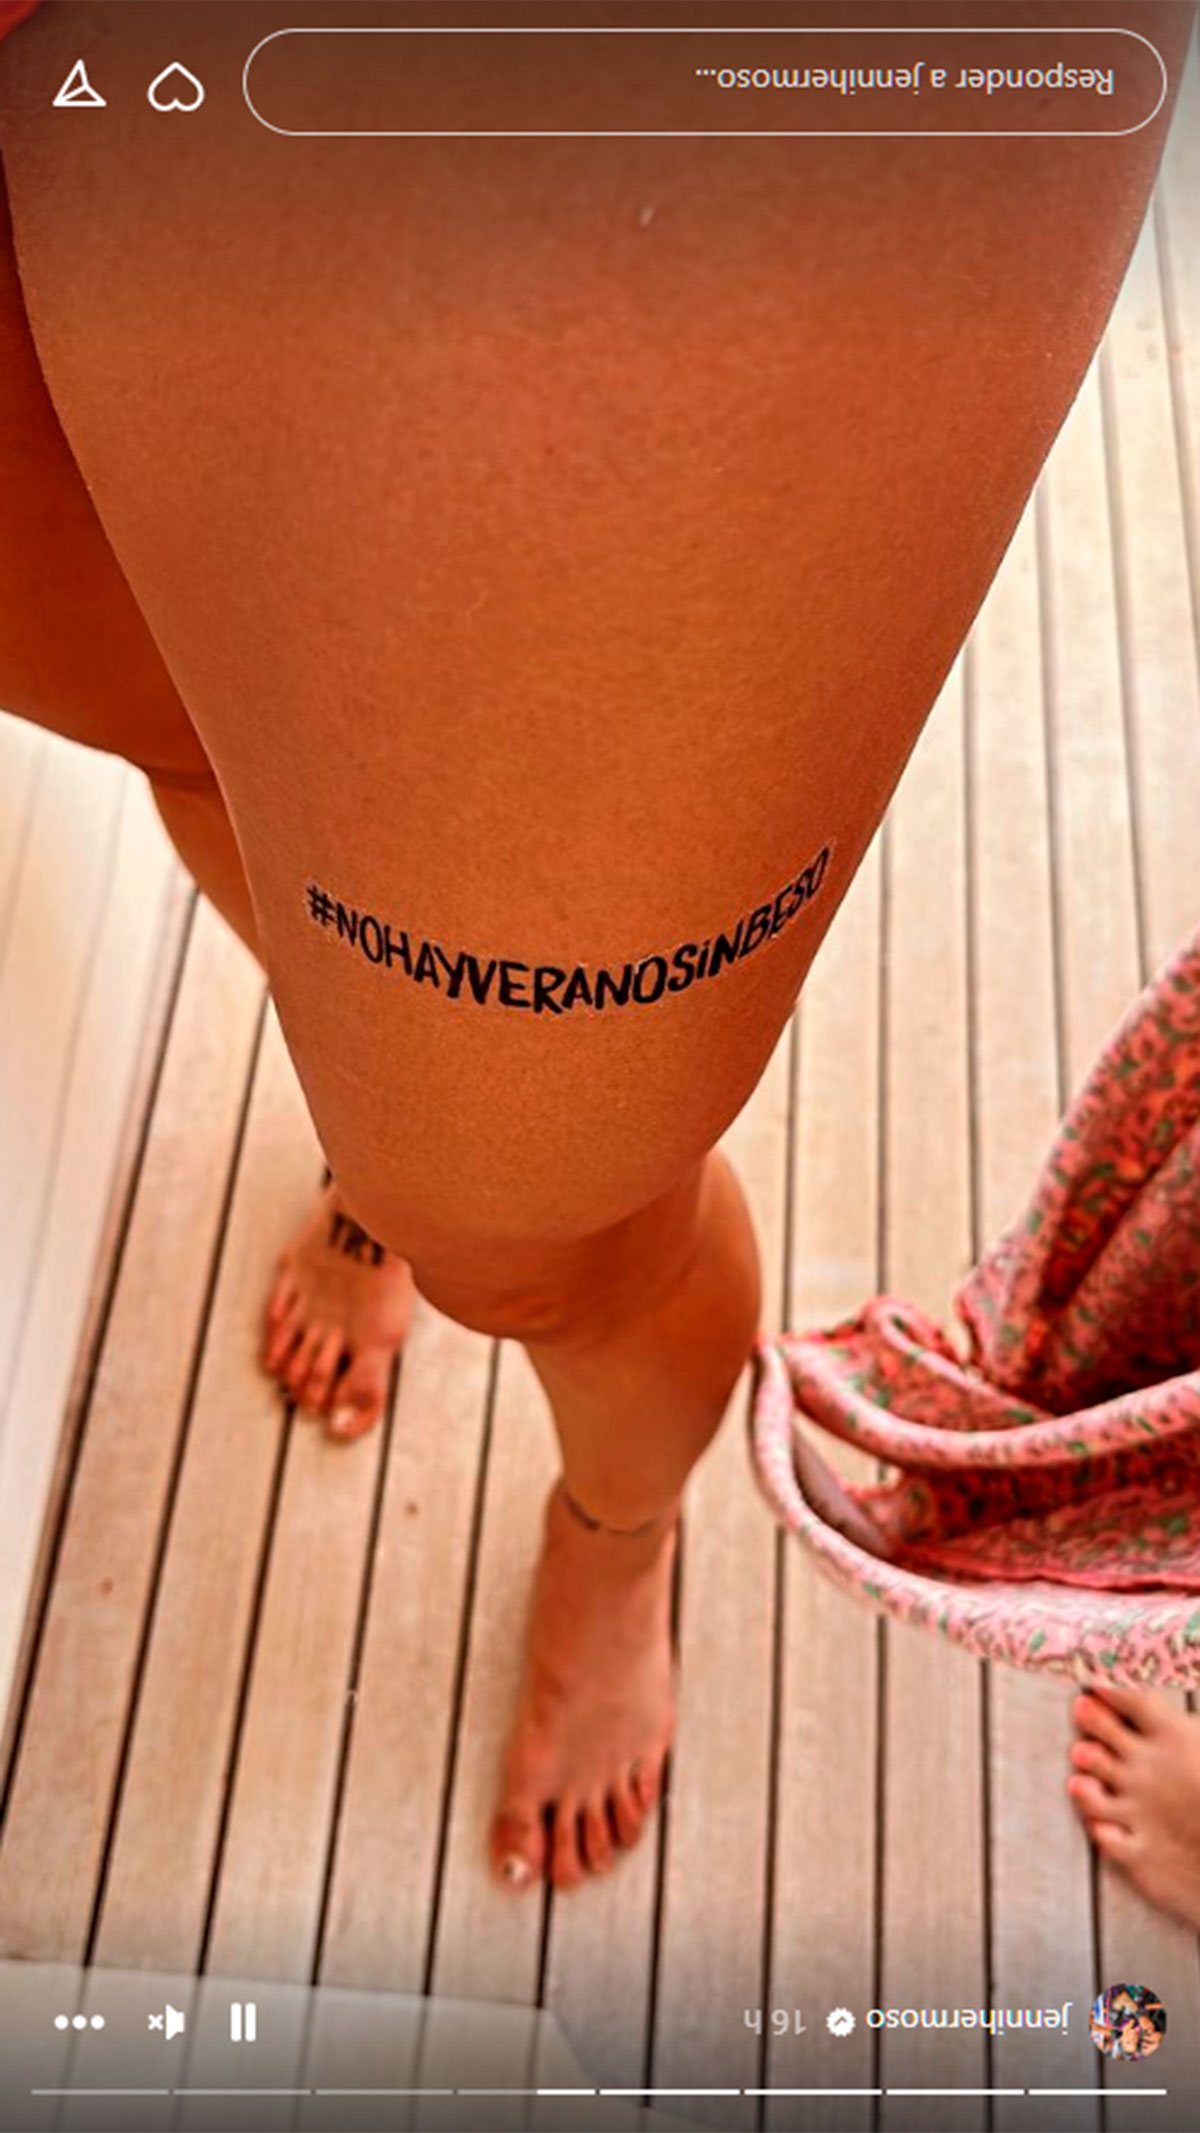 Jenni Hermoso con un tatuaje polémico